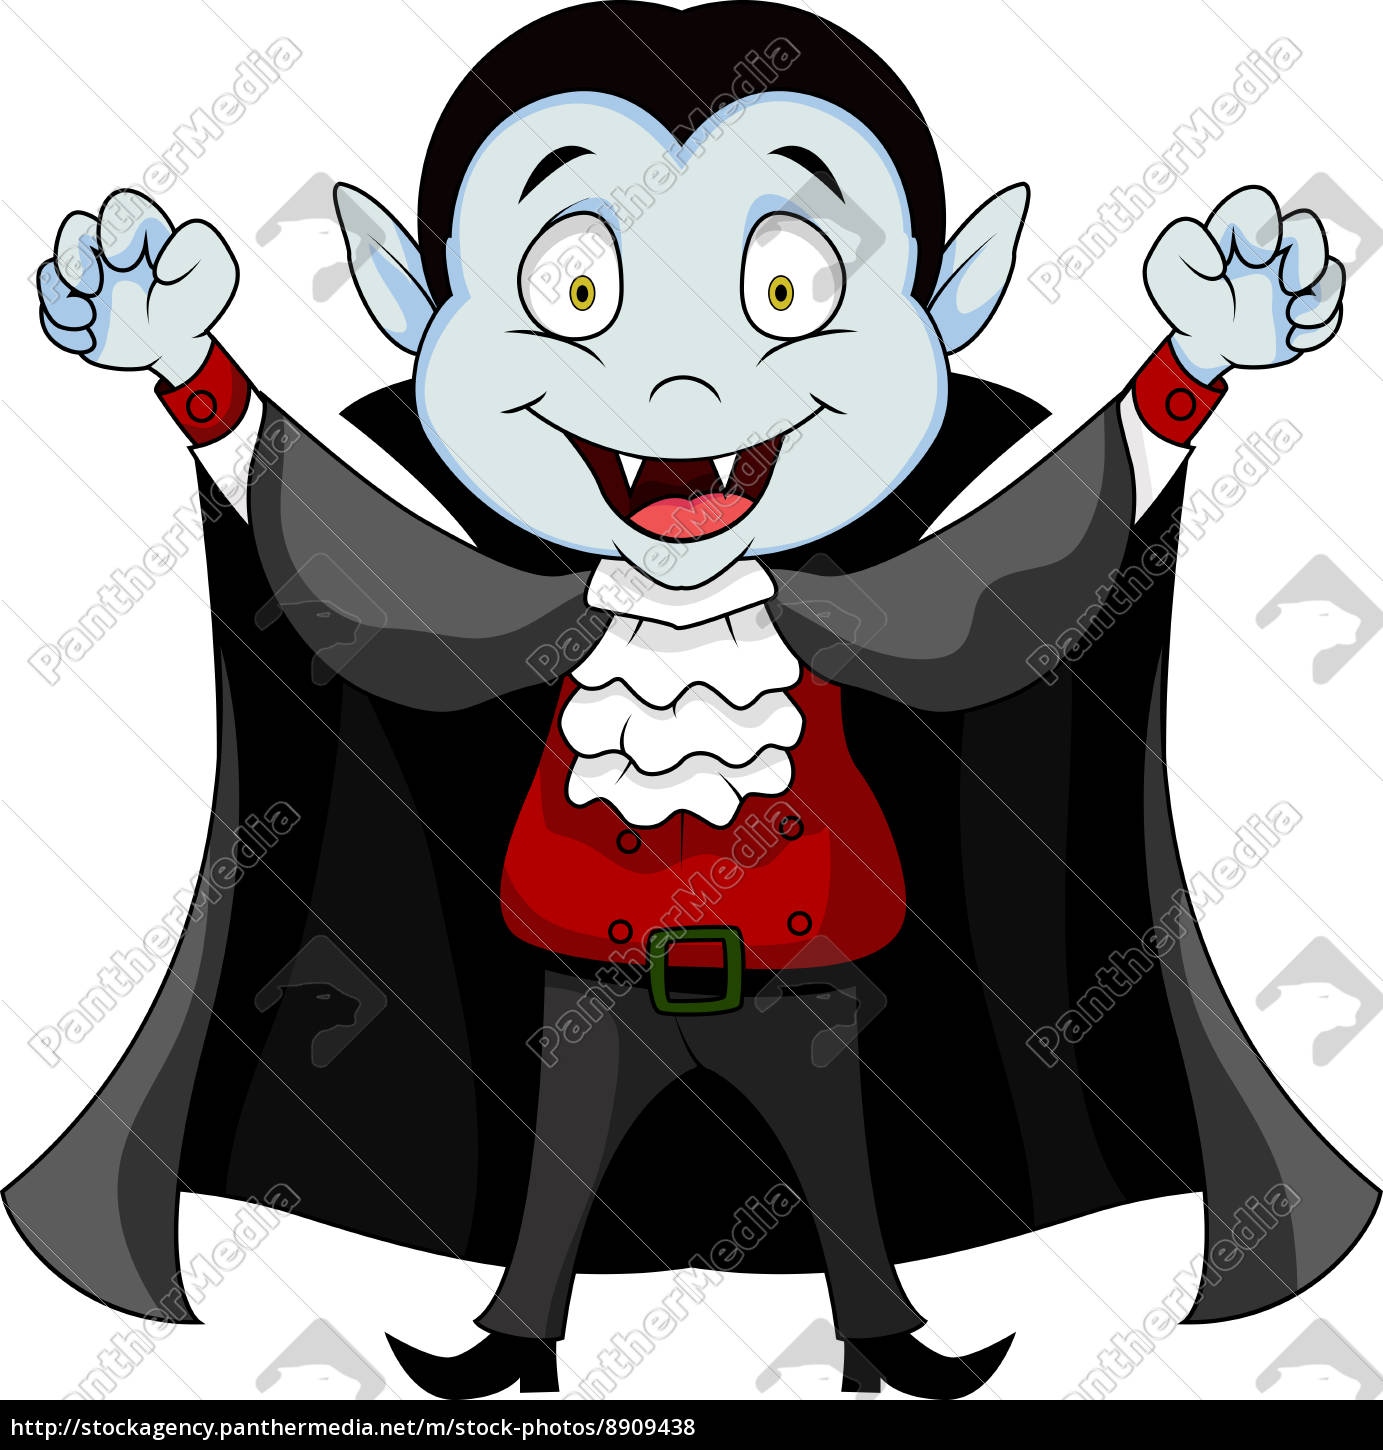 Vampiro feliz dos desenhos animados, Vetor Premium